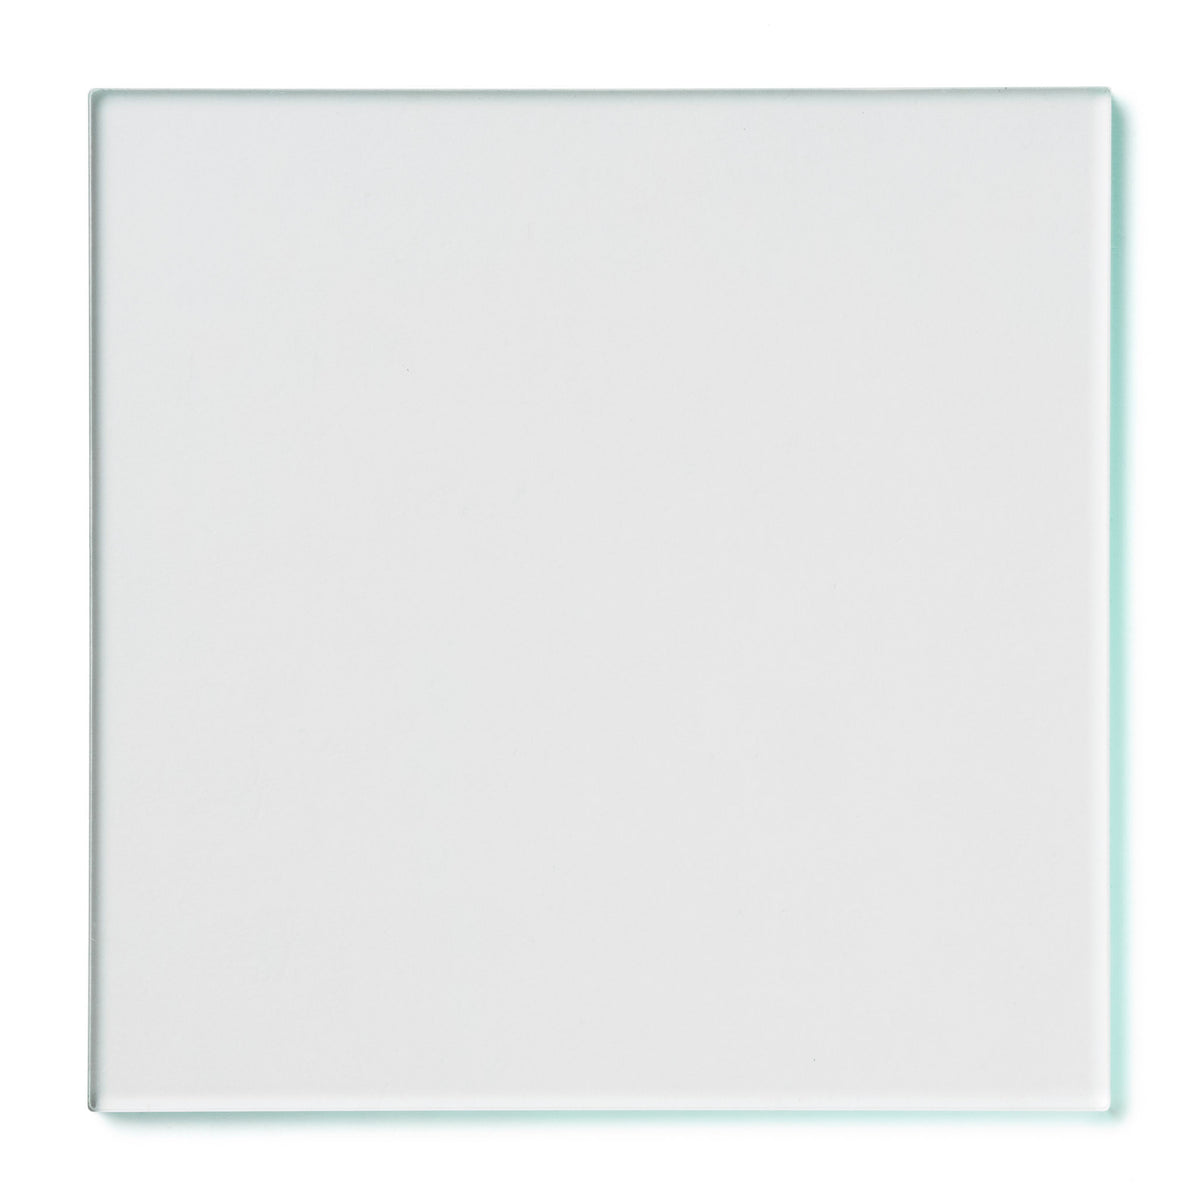 Green Edge Acrylic Plexiglass Sheet, Swatch view